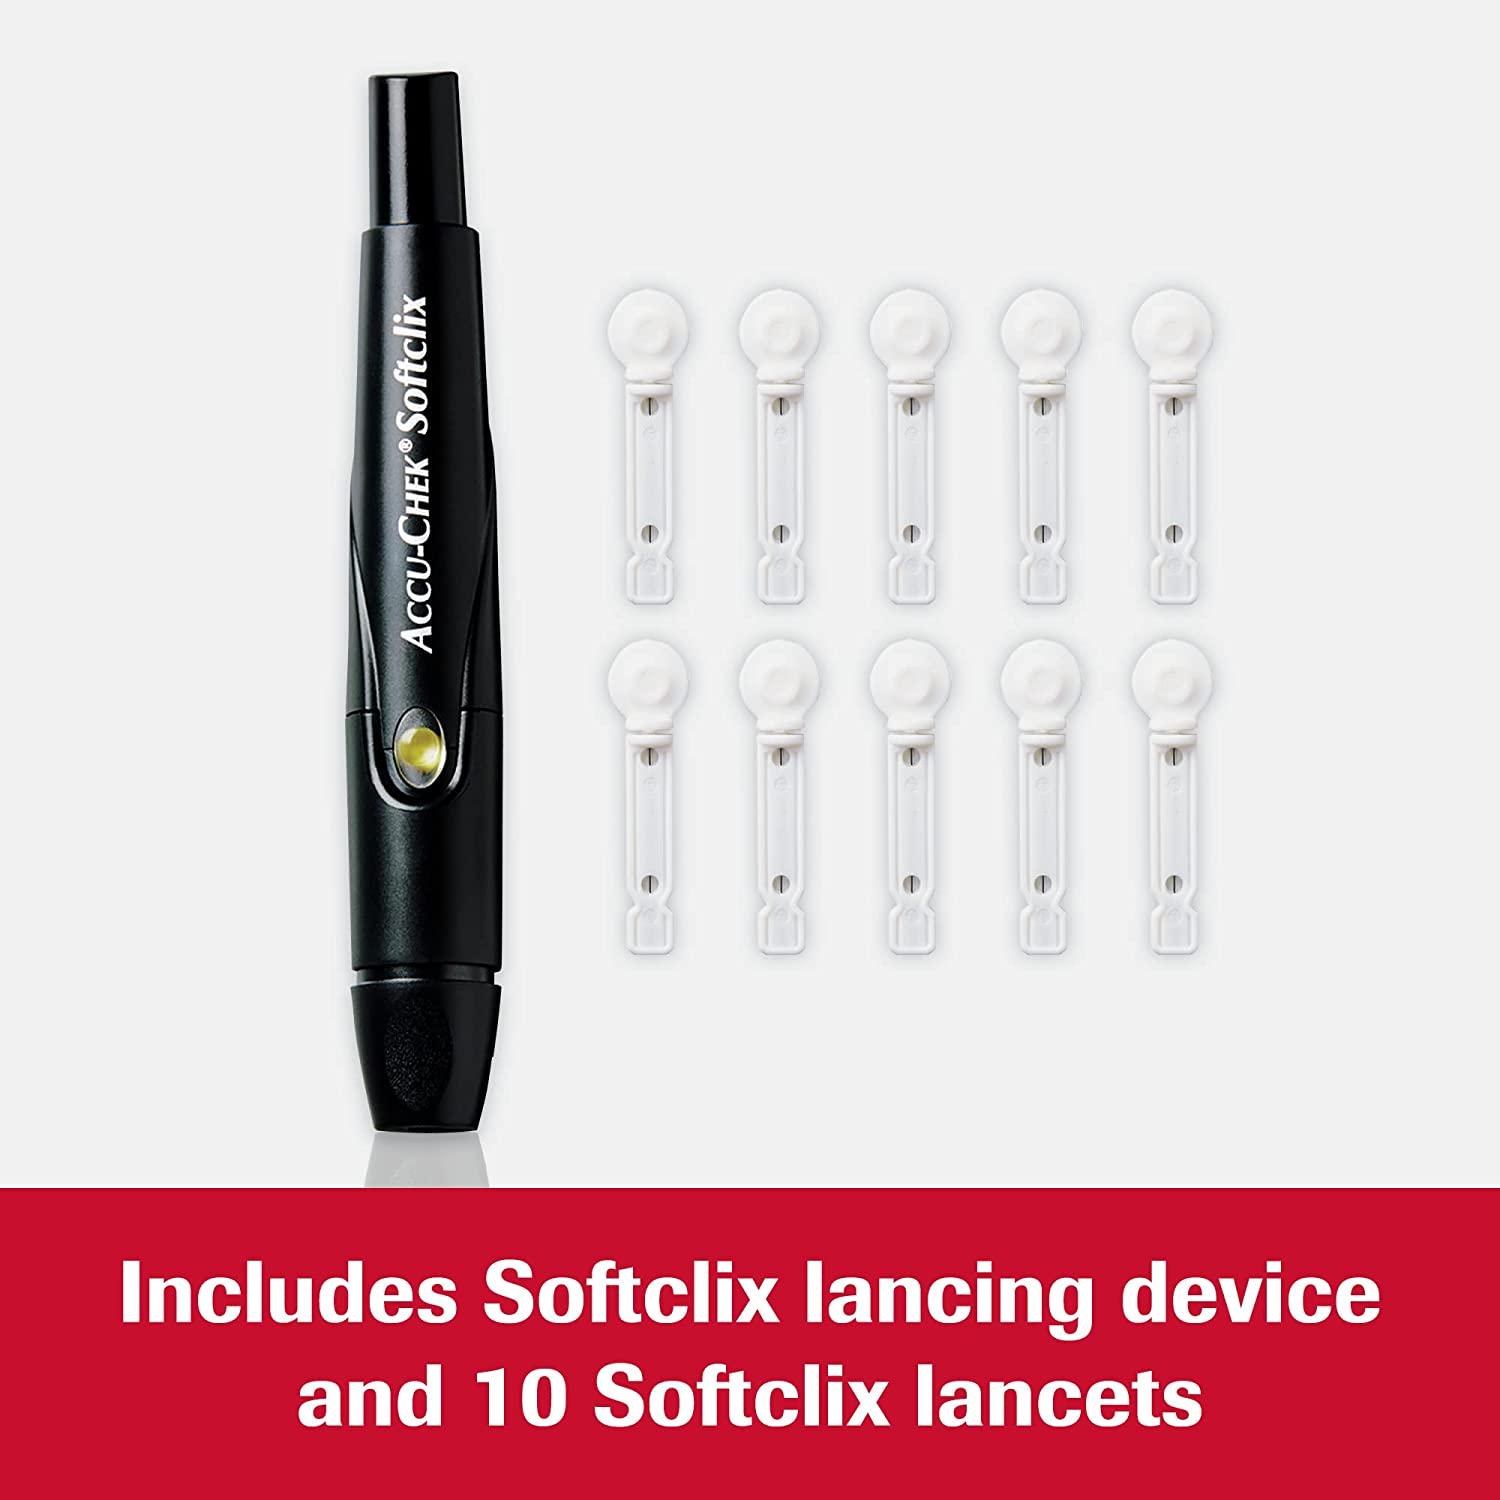 Accu-Chek Guide Glucose Meter Kit | 1 Meter + 10 SoftClix Lancets + 1  Lancing Device